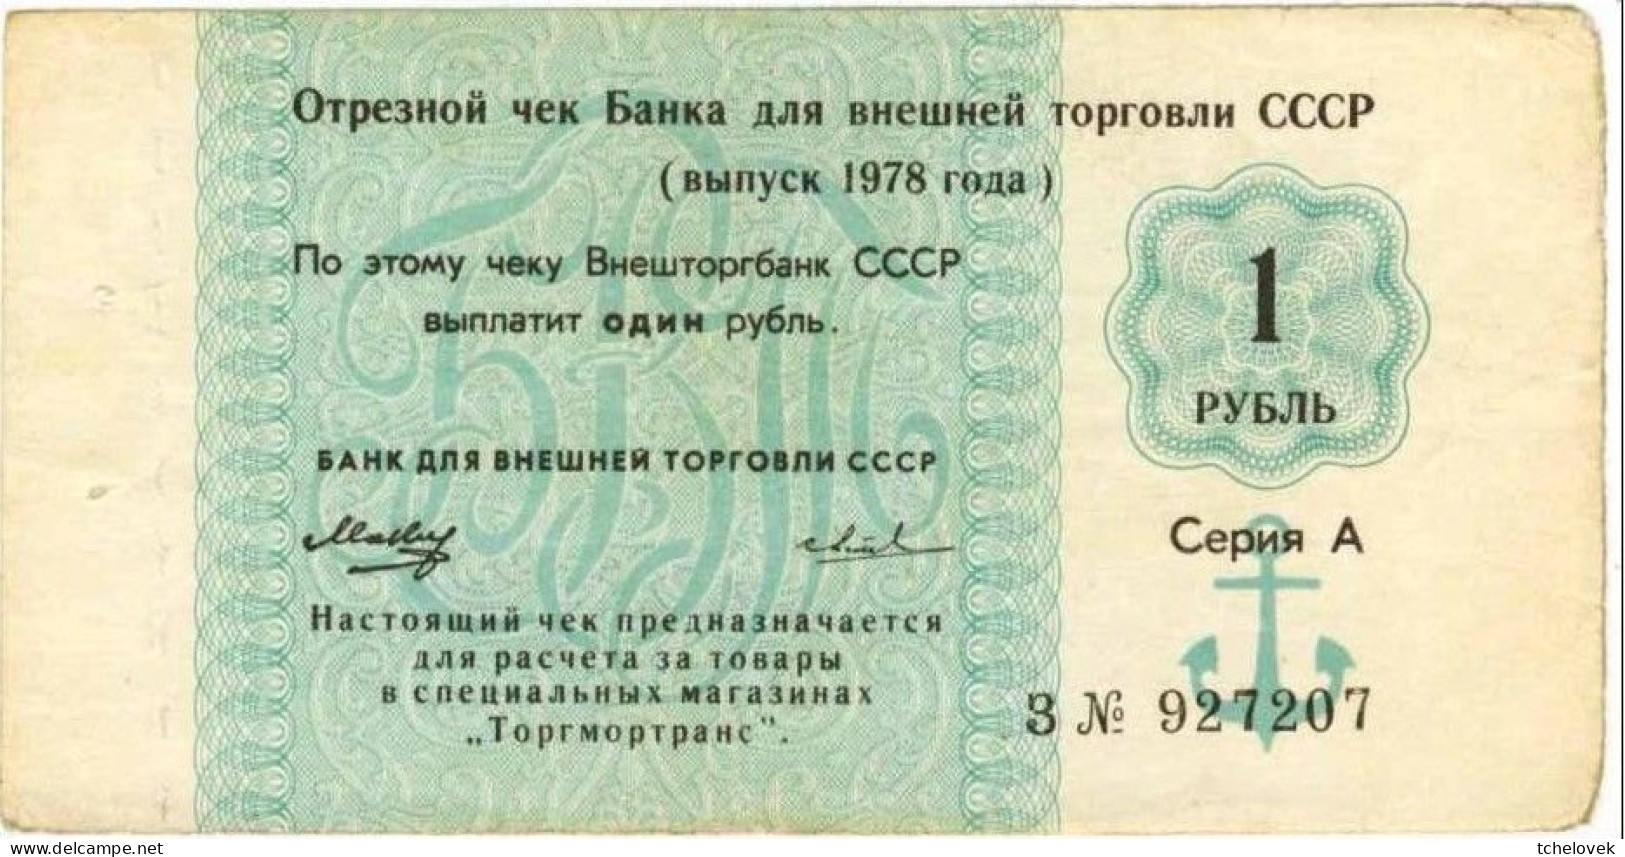 (Billets).Russie Russia USSR Vneshposiltorg Vneshtorgbank 1 R 1978 Ancre Serie Z N° 927207. Foreign Exchange Certificate - Russia